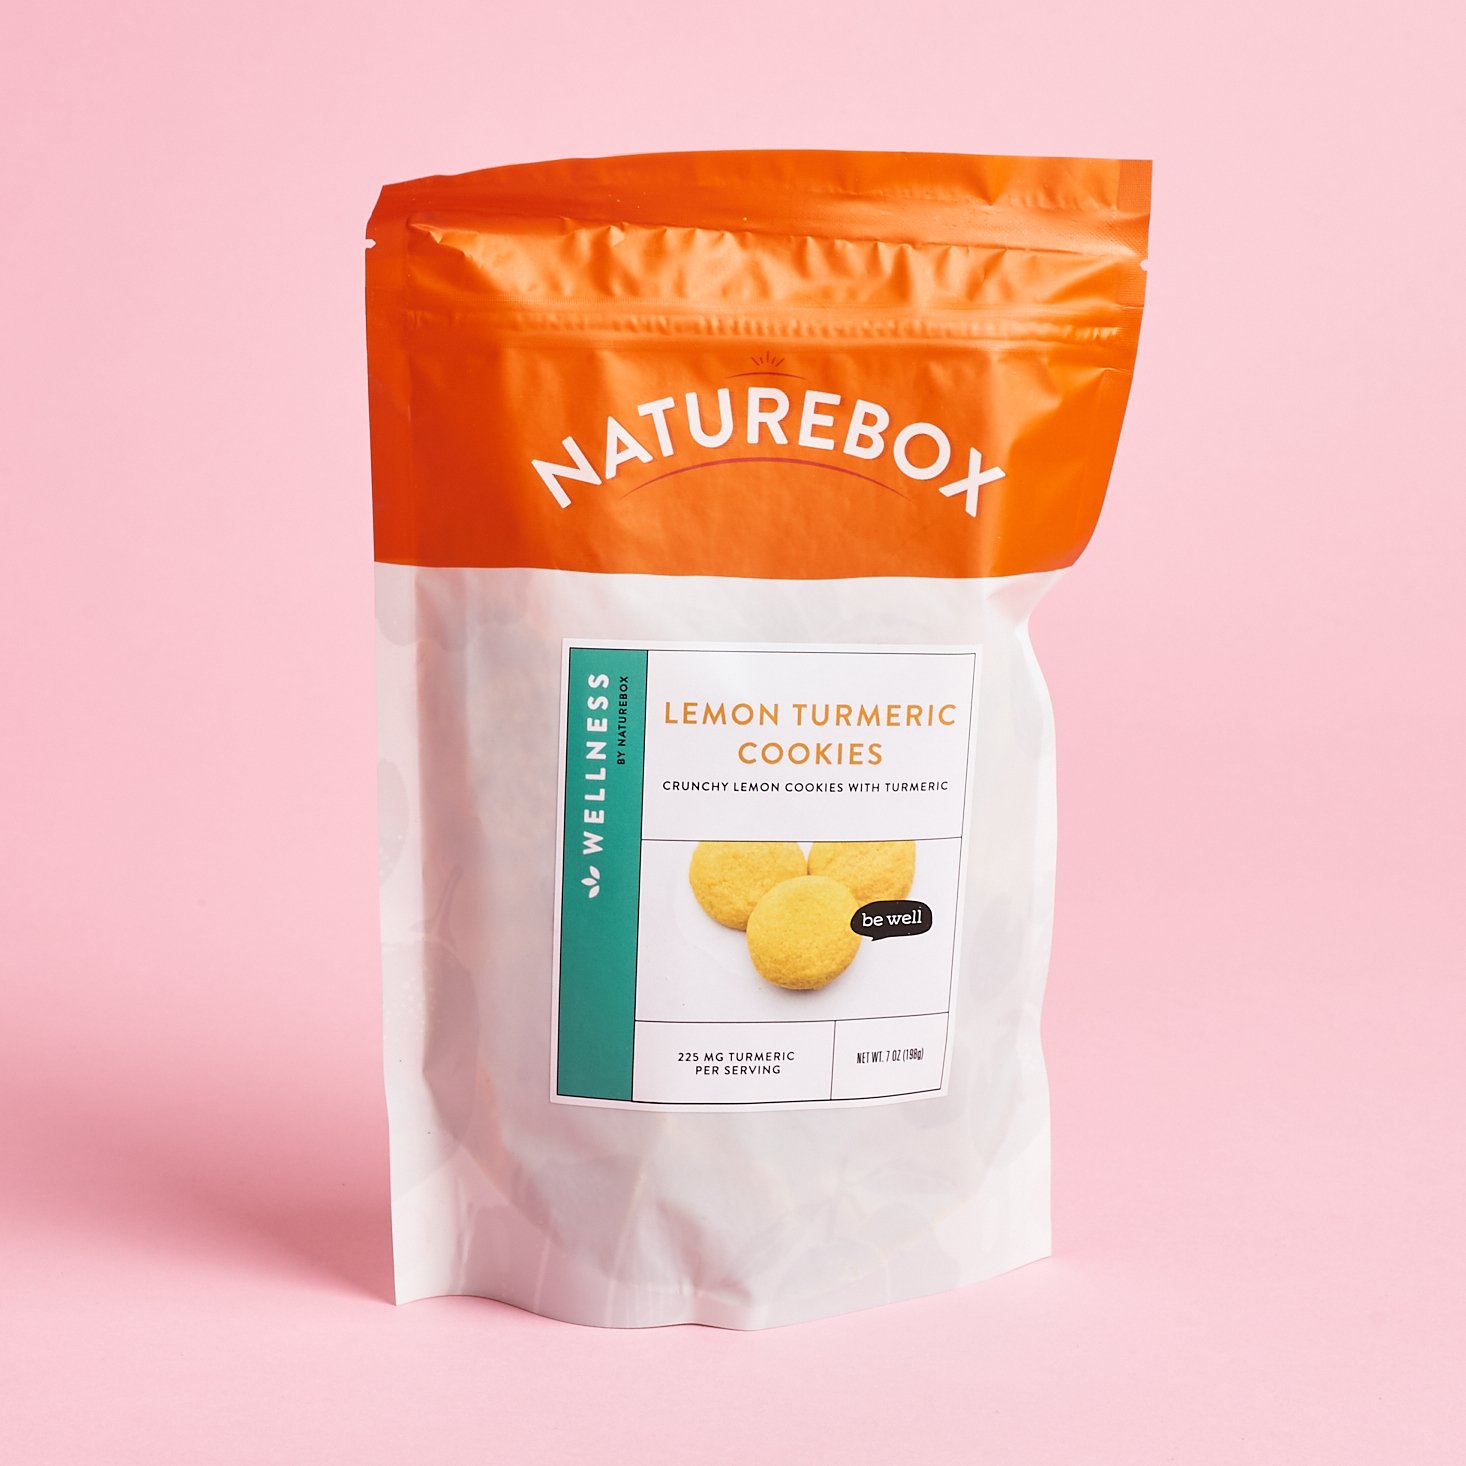 Naturebox October 2020 lemon turmeric cookies